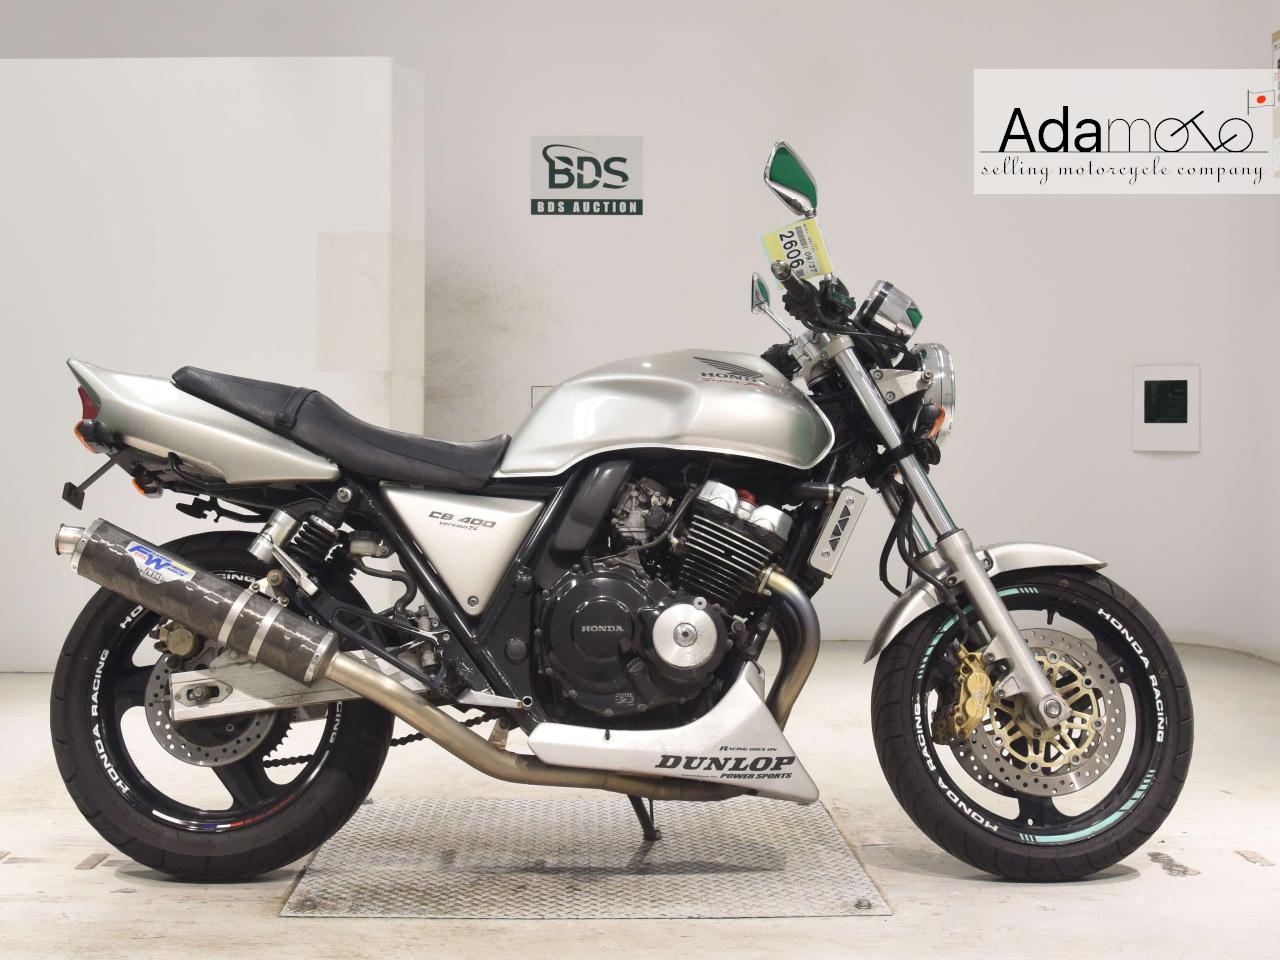 Honda CB400SF S - Adamoto - Motorcycles from Japan